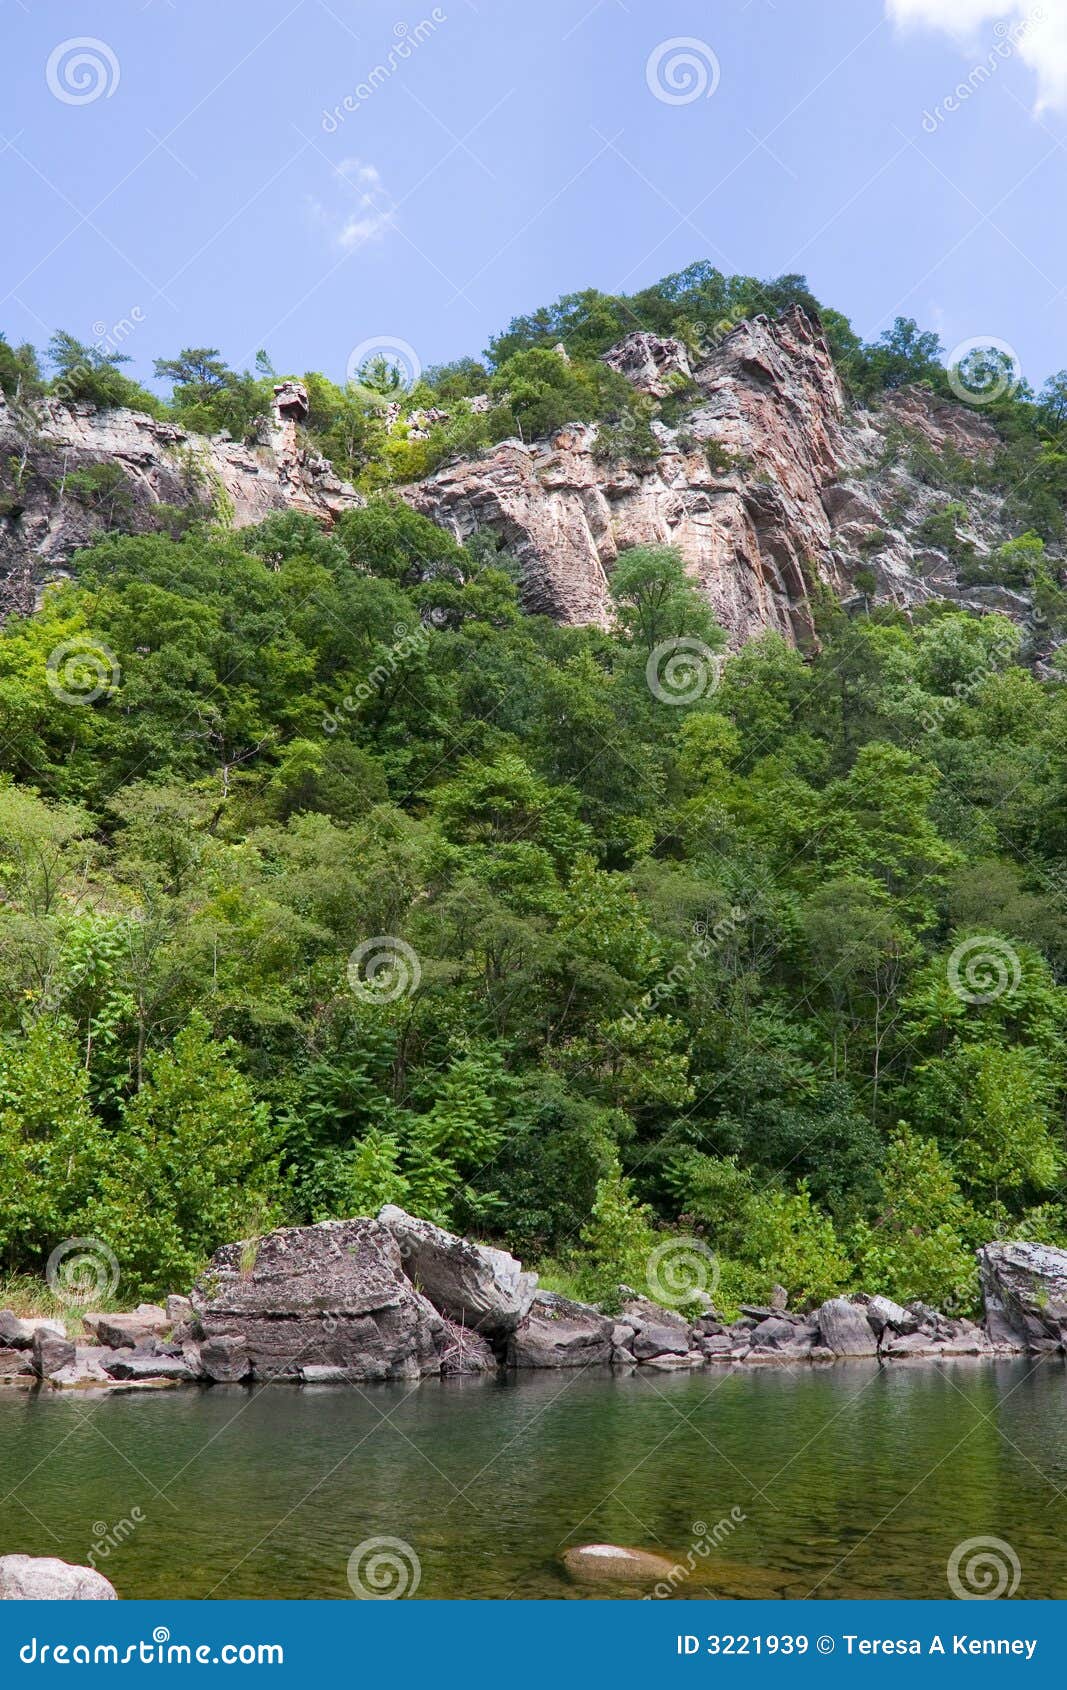 seneca - rocks, trees, river